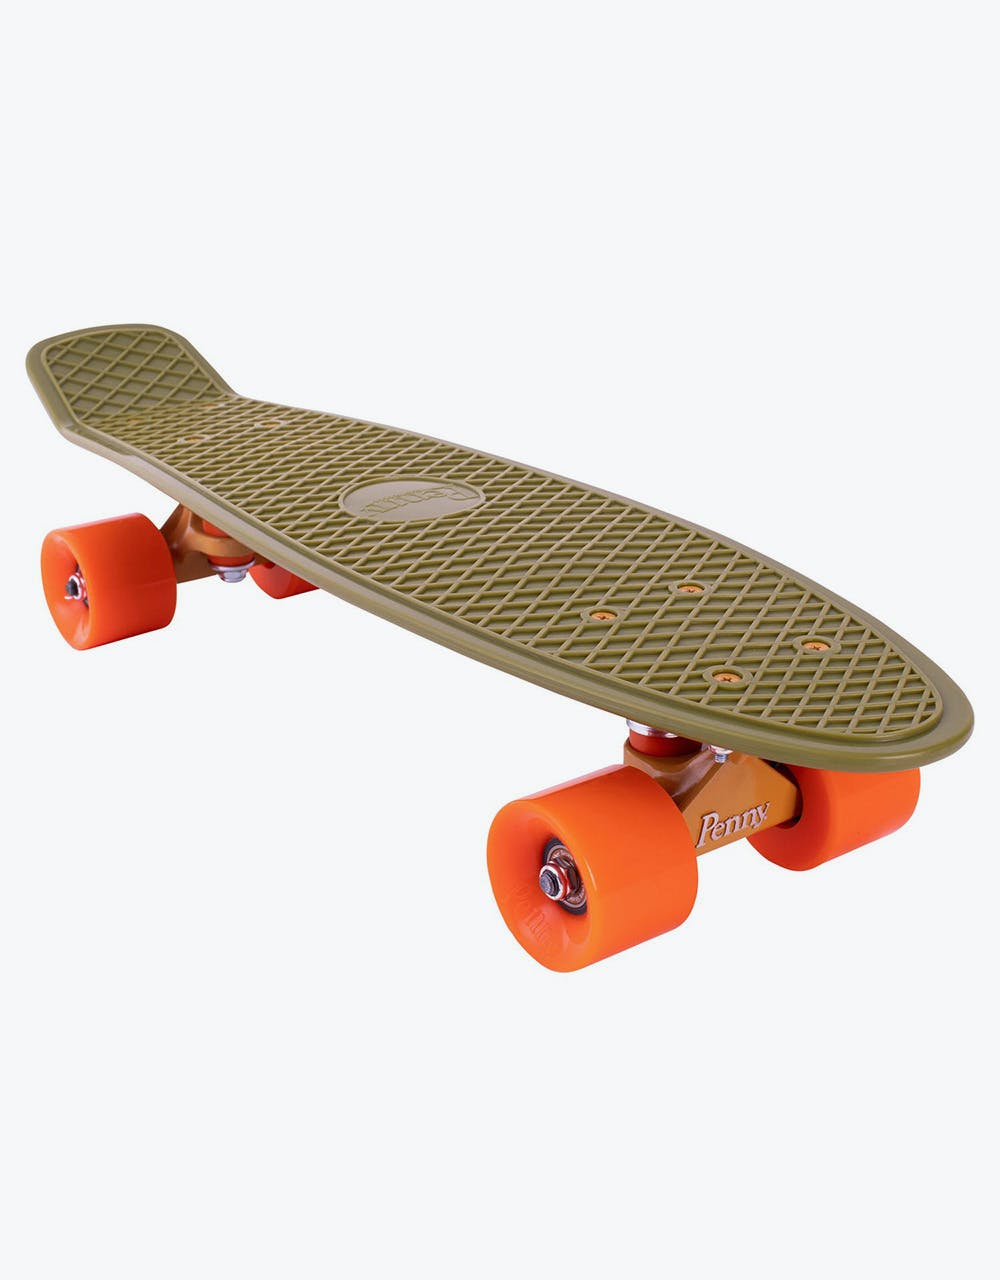 Penny Skateboards Classic Cruiser - 22" - Burnt Olive